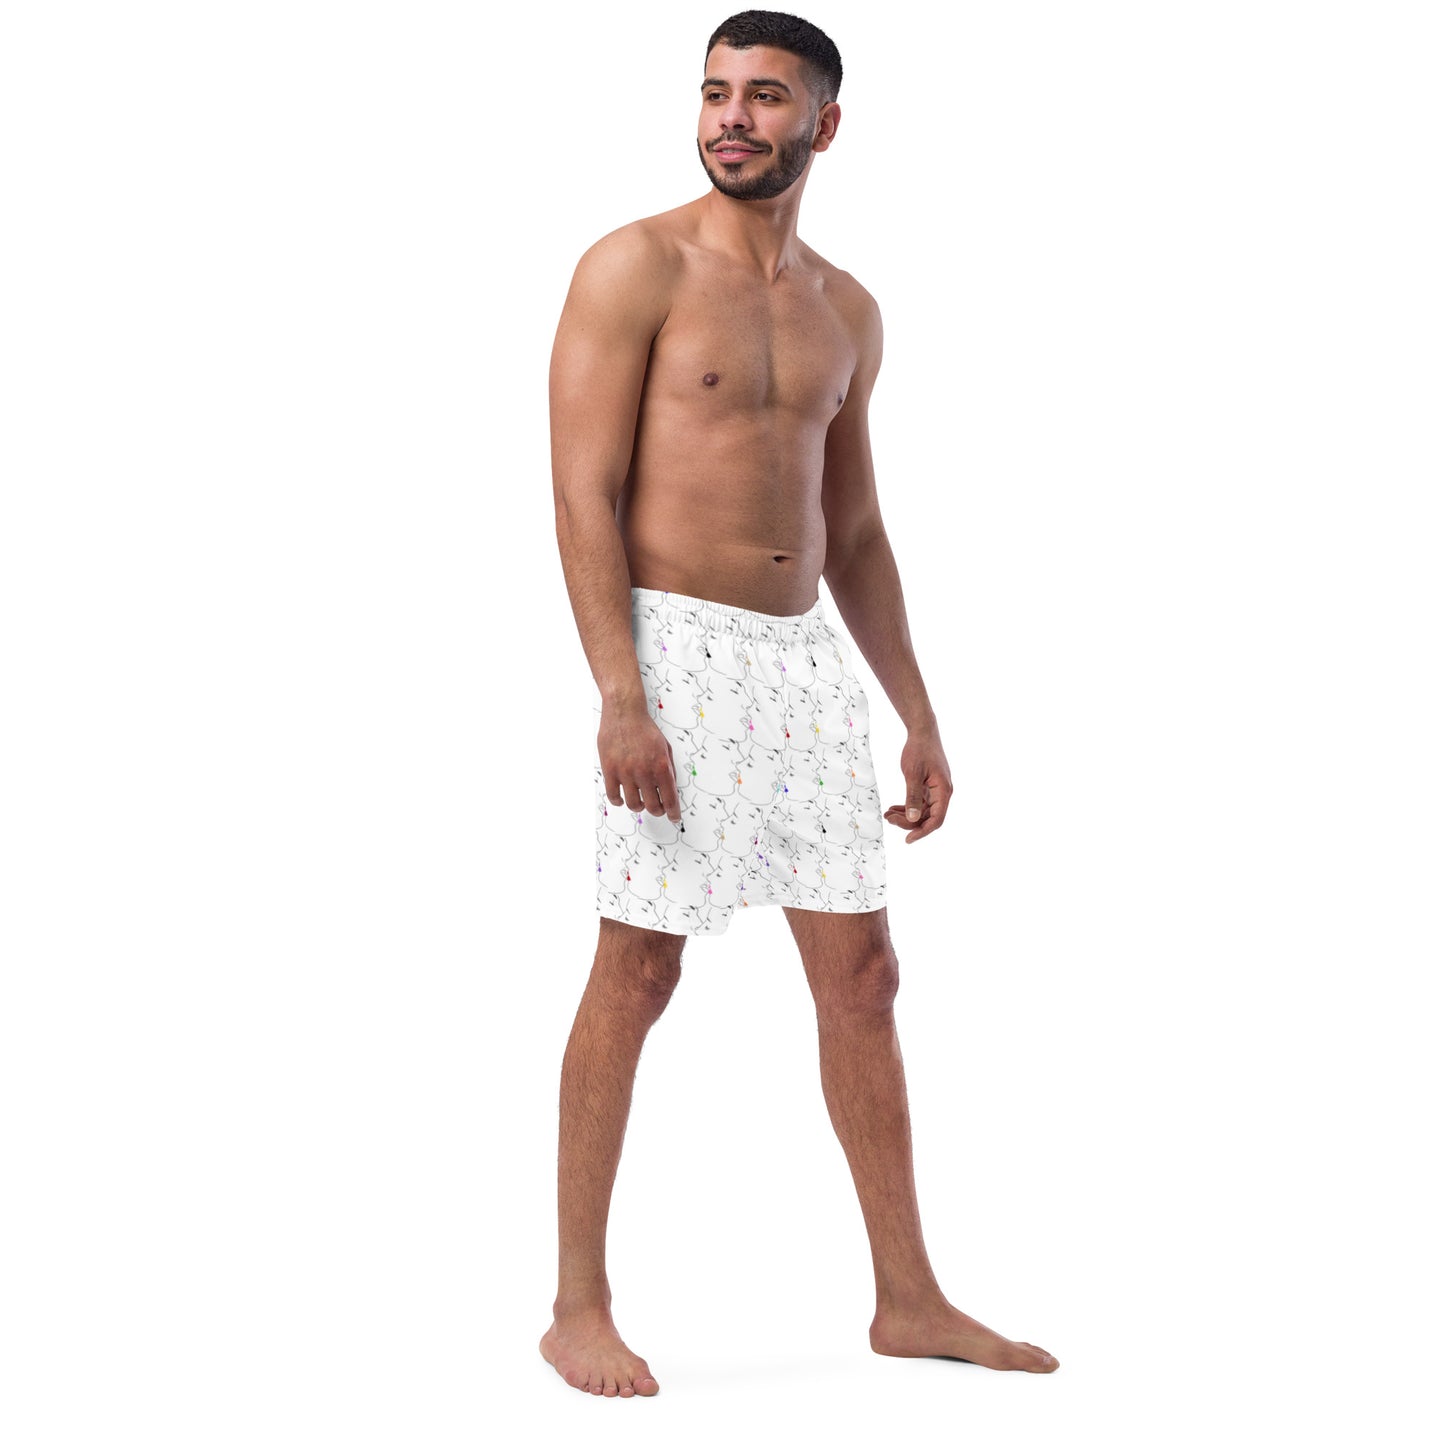 All-Over Print Recycled Swim Shorts: Tender Kisses Print (on white)